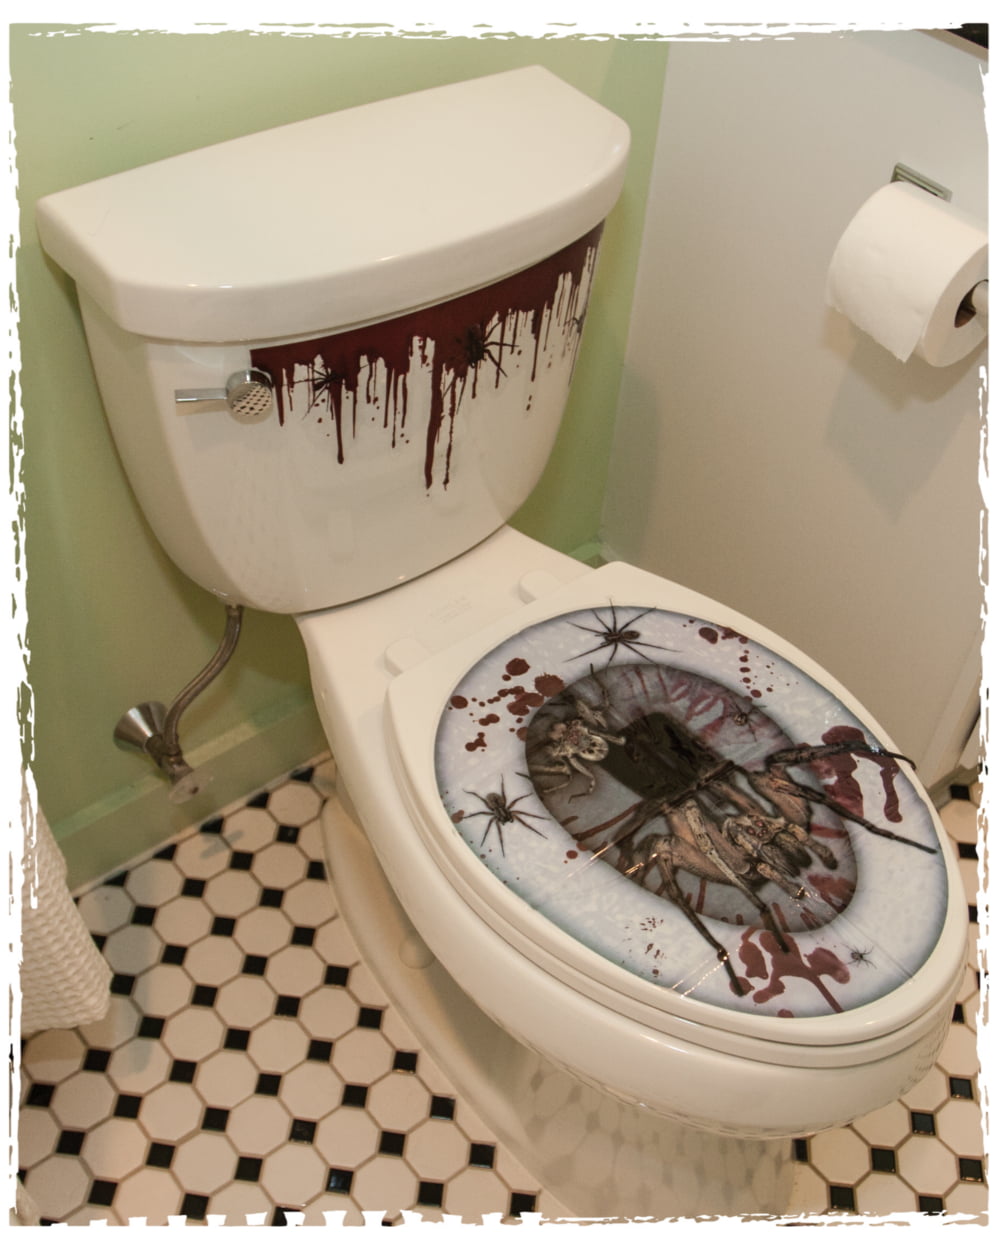 Спайдер туалет. Украсить туалет на Хэллоуин. Наклейки на унитаз с пауками.